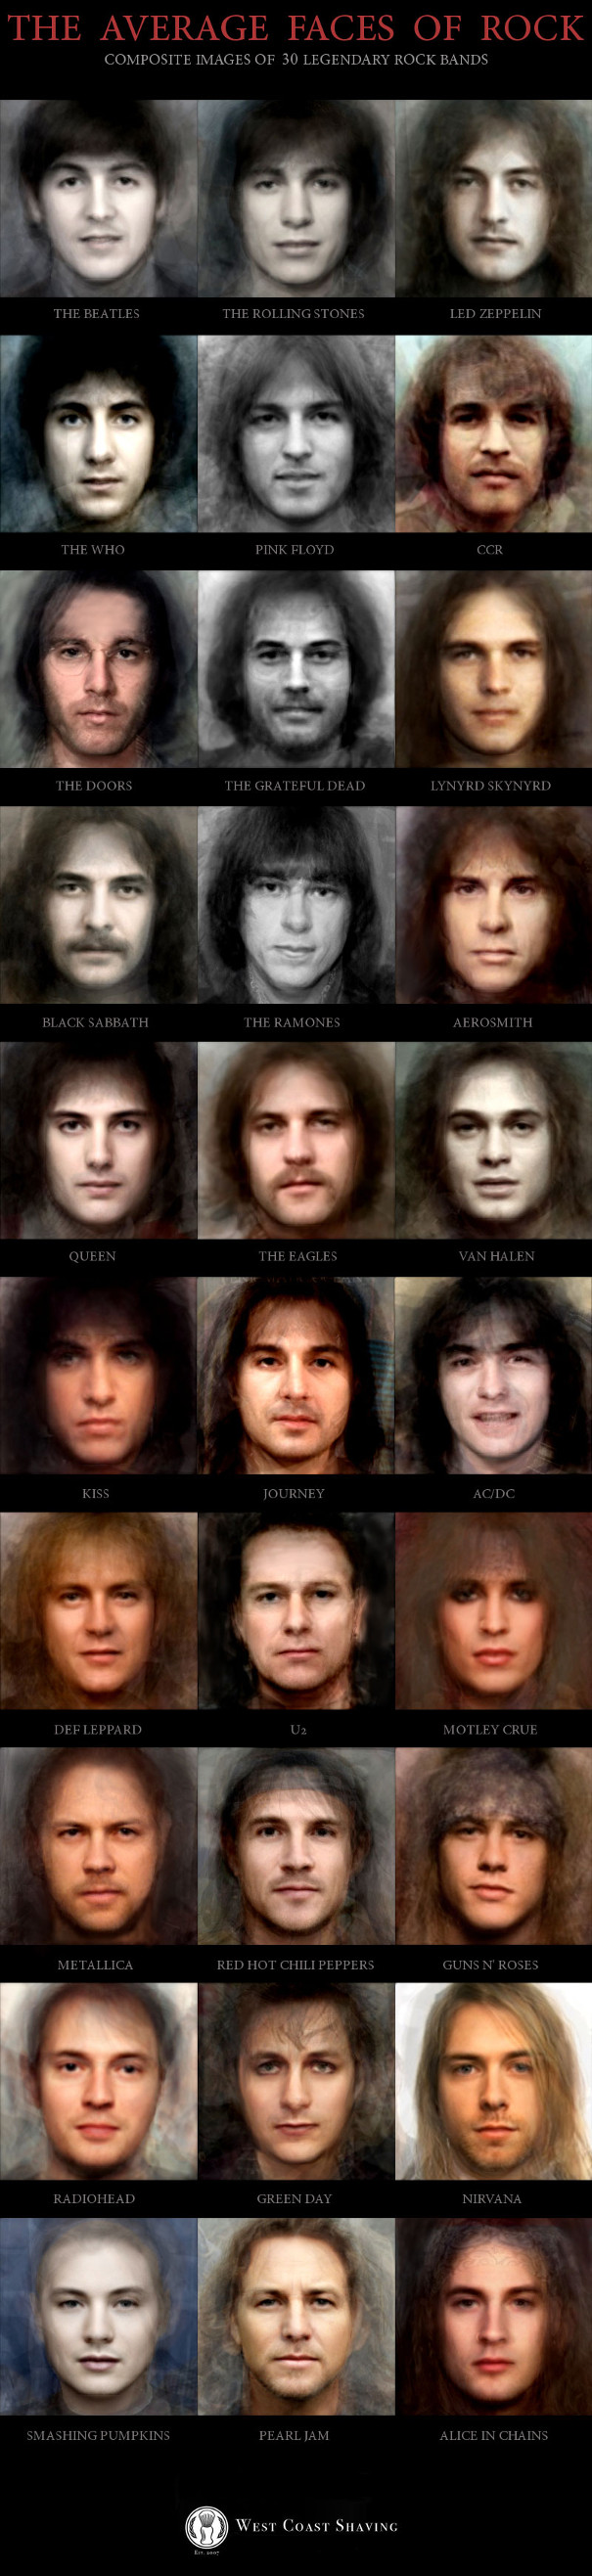 faces-of-rock.jpg